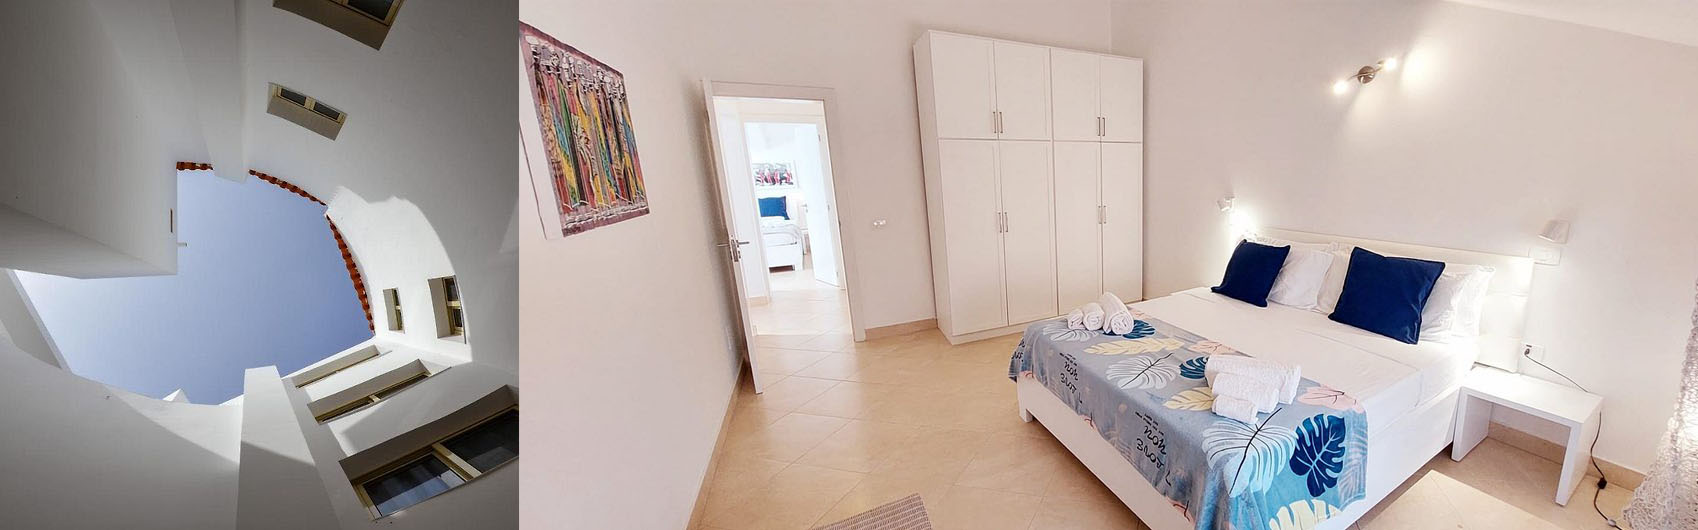 A Glimpse into Luxury: NEW Branco Suites in Santa Maria